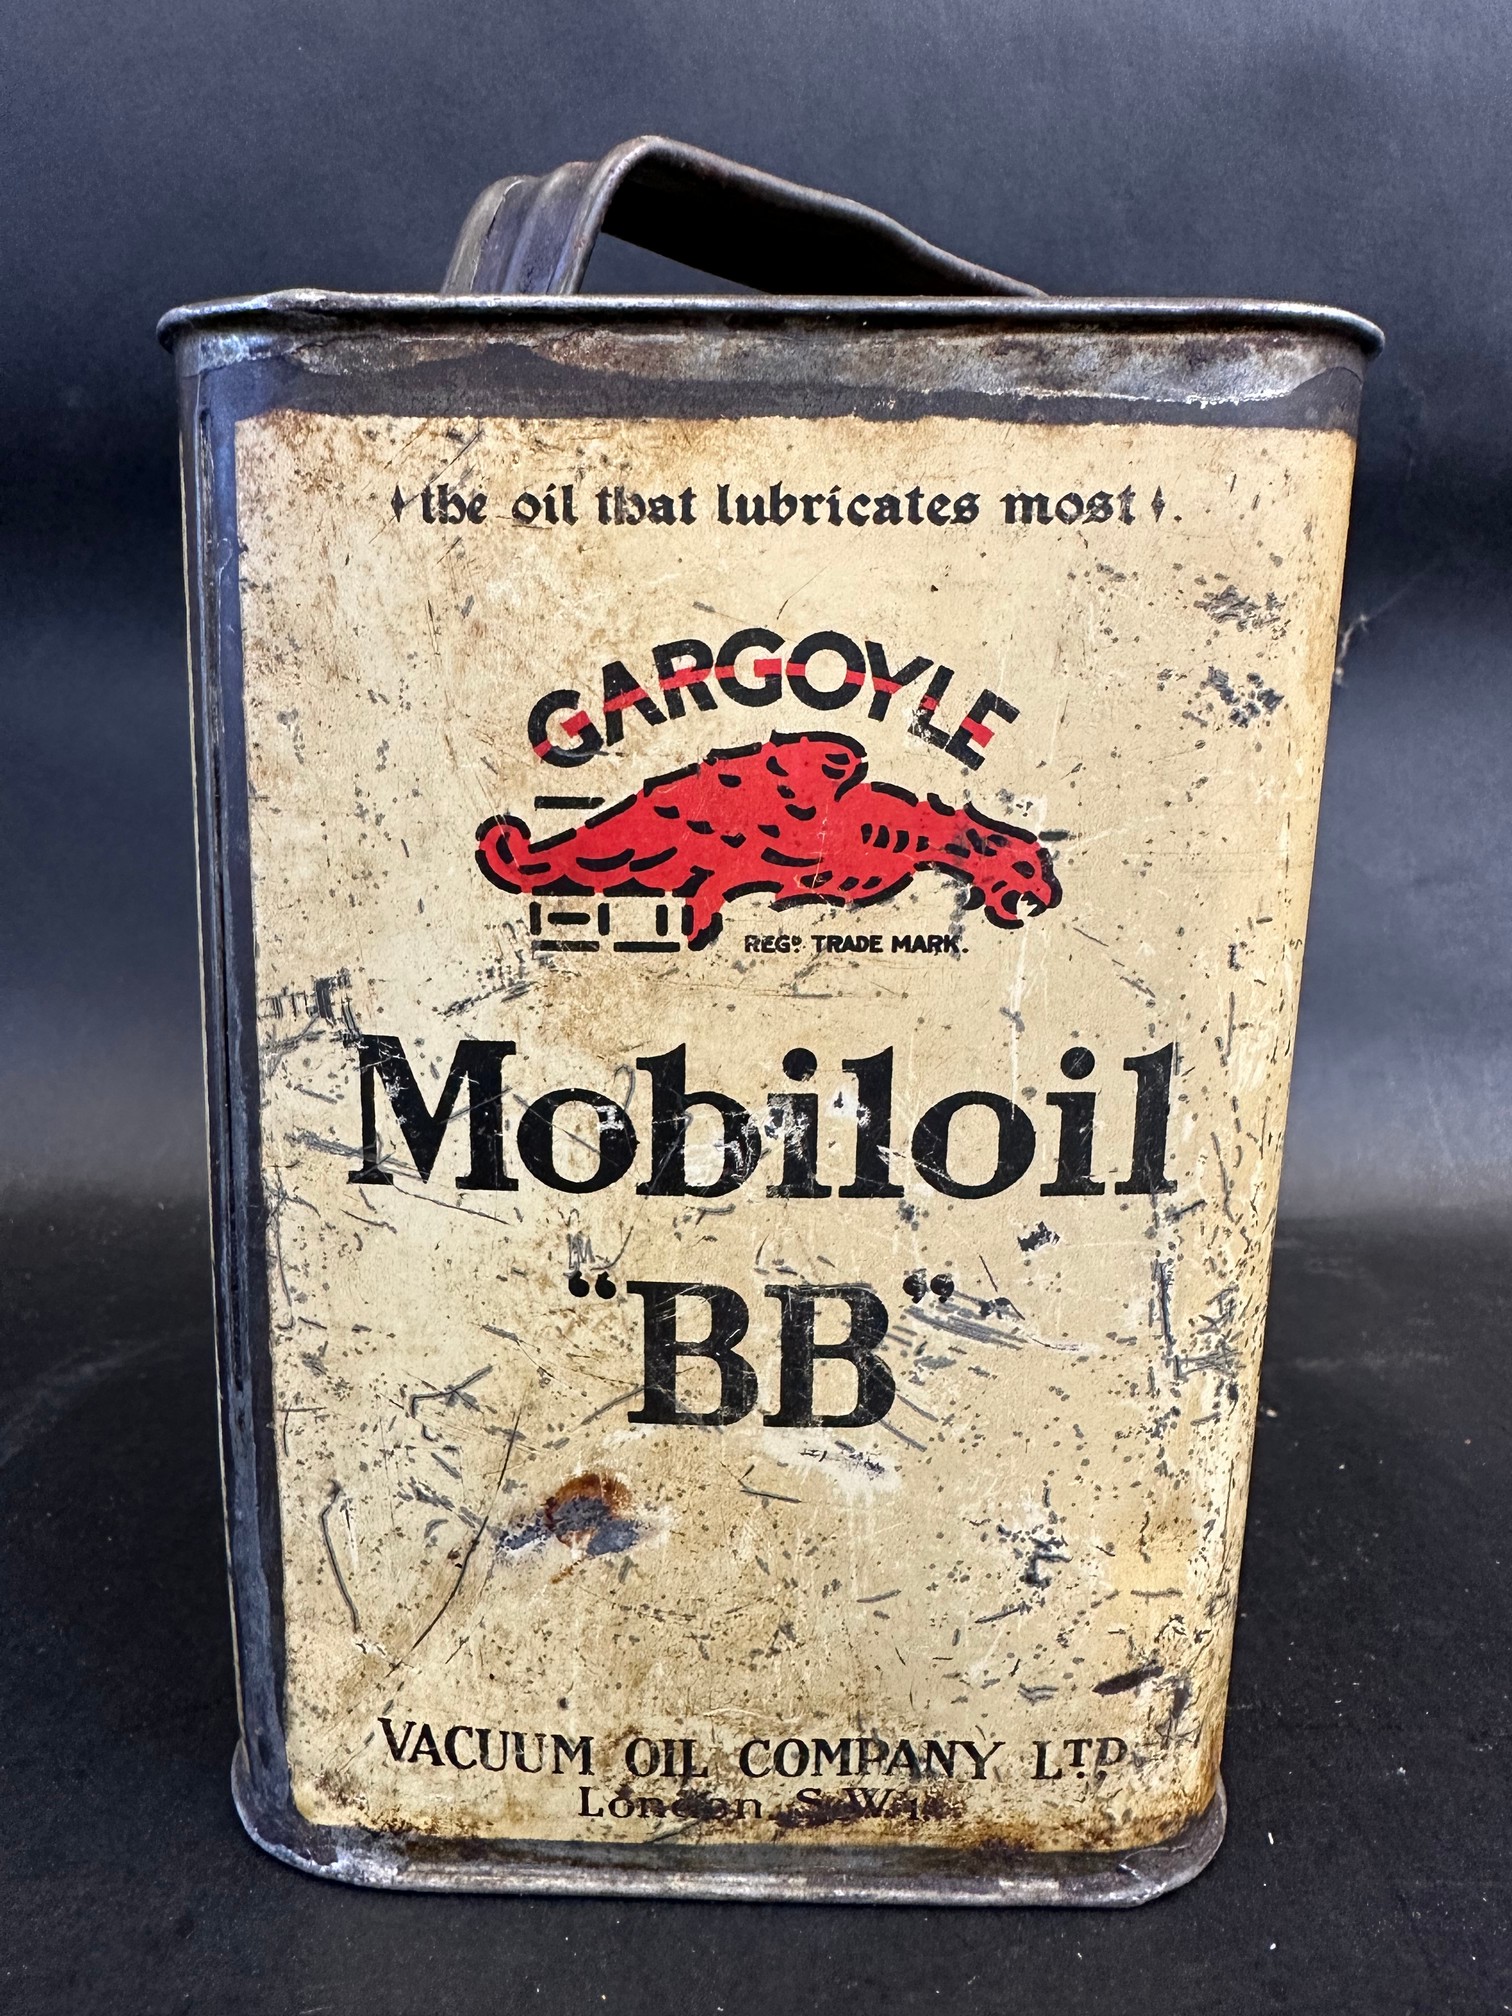 A Gargoyle Mobiloil 'BB' grade square can.